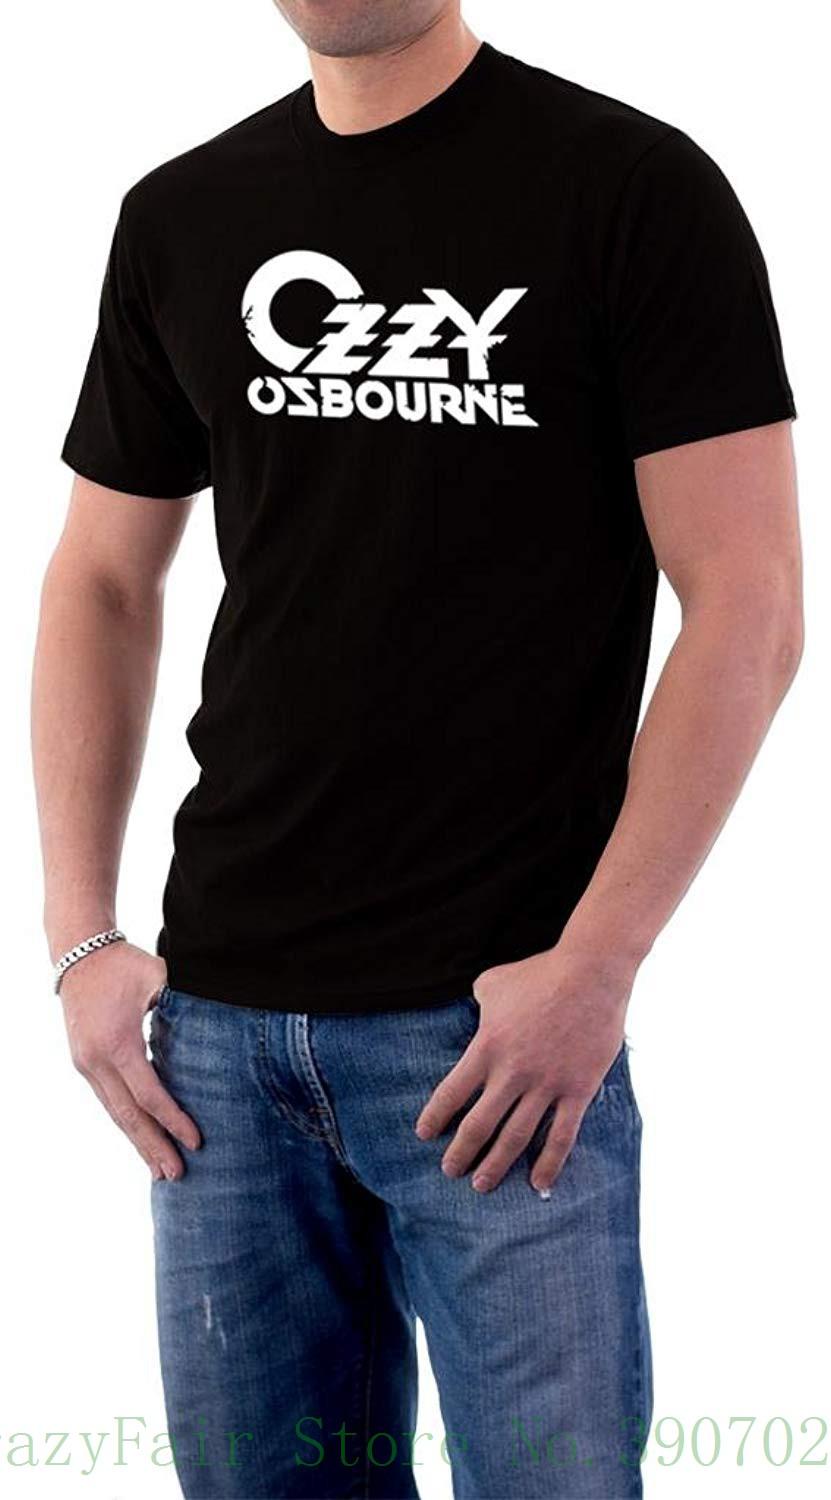 Ozzy Osbourne Band Logo - Ozzy Osbourne Black Sabbath Band Logo Men'S T Shirt For Man Hipster